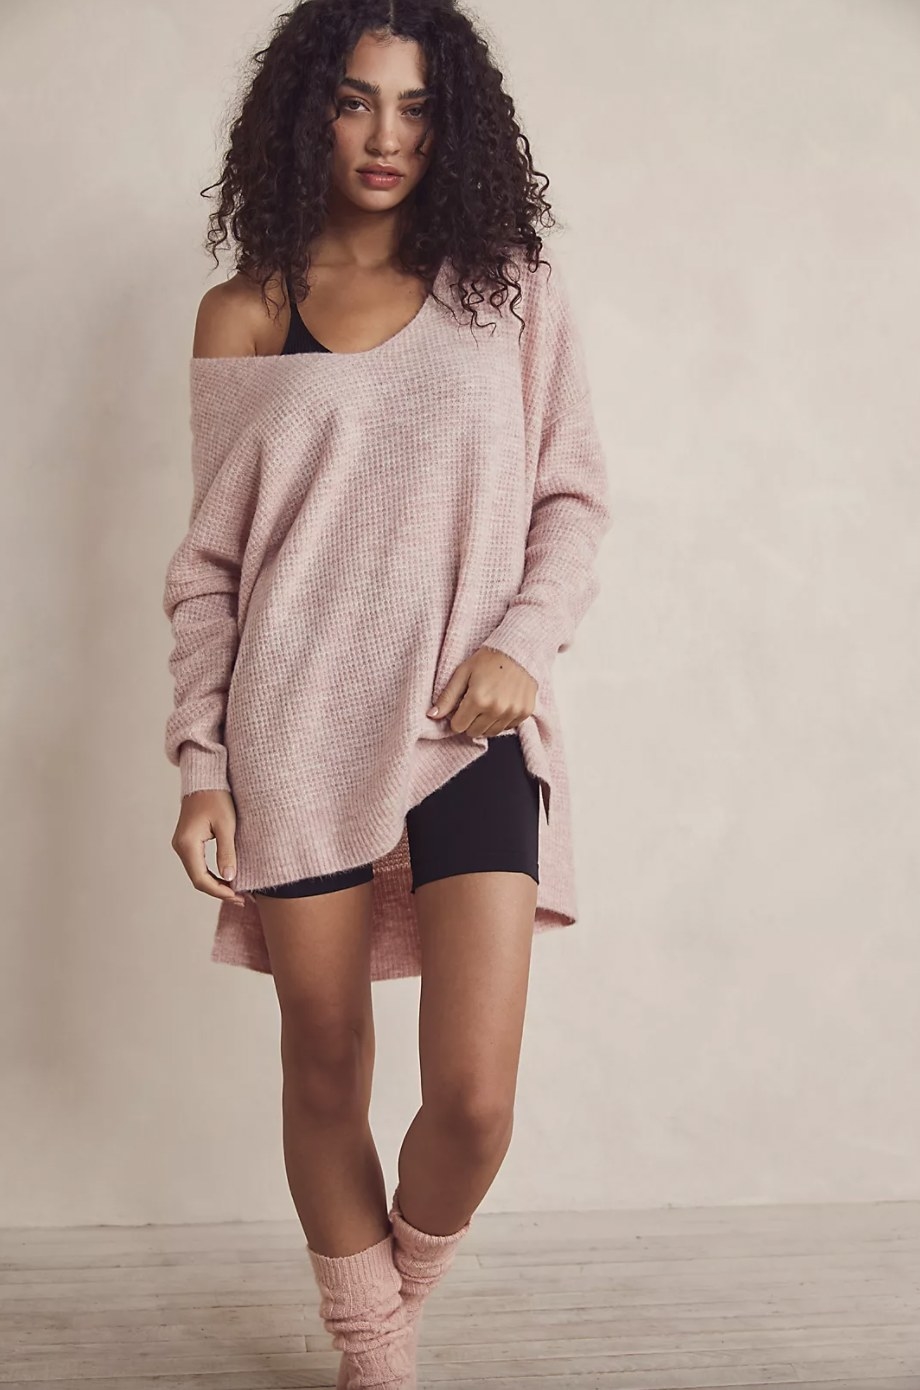 Model wearing pink oversized sweater